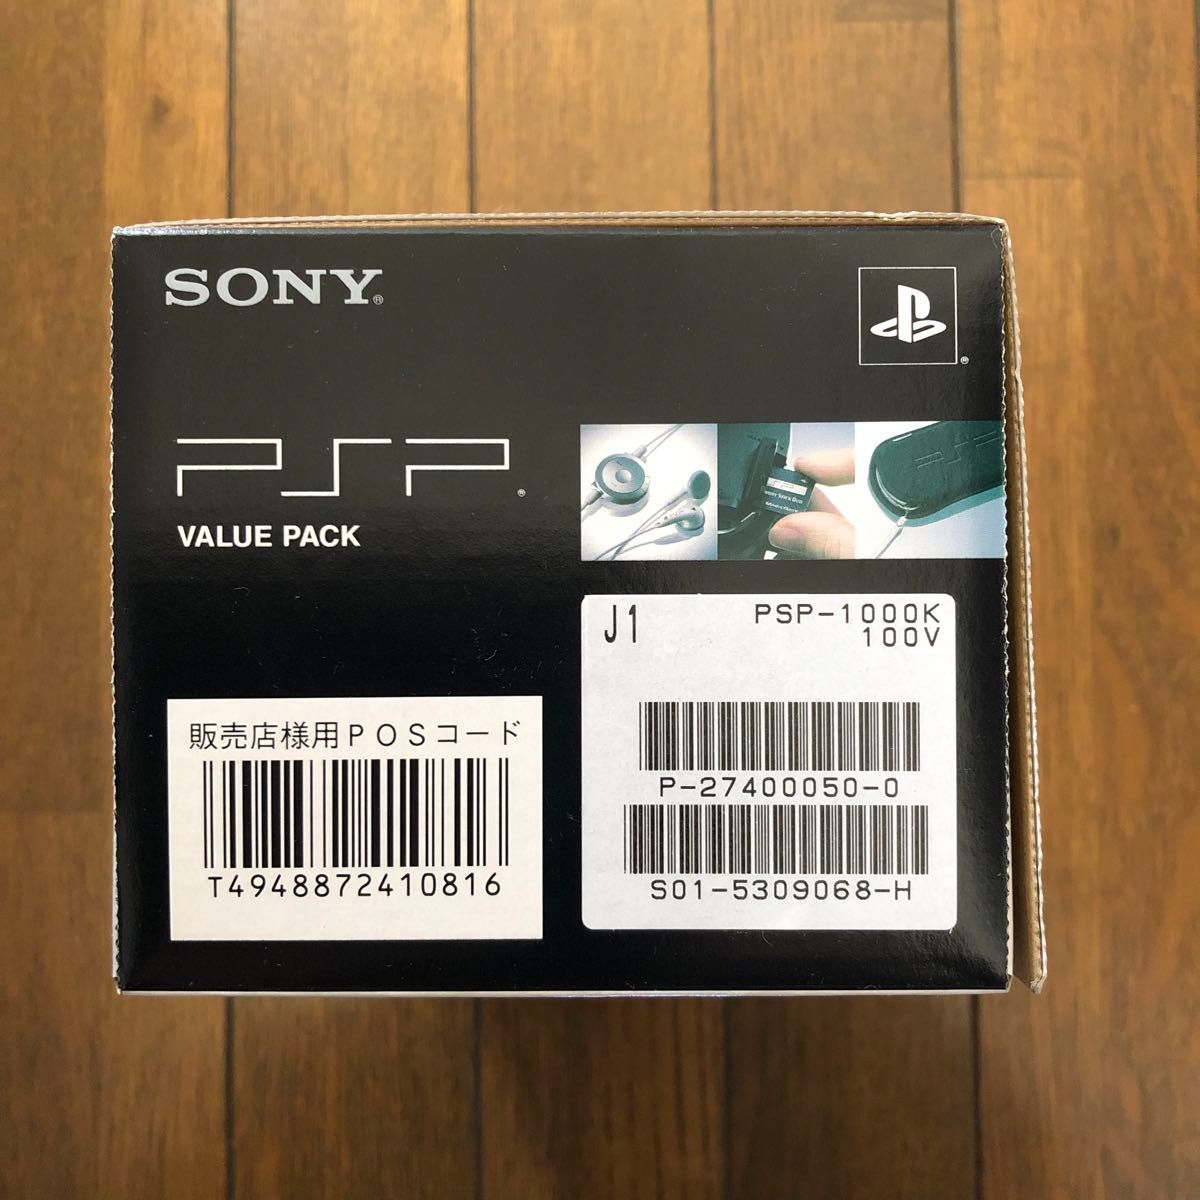 《新品未開封》【激レア】SONY PSP-1000K VALUE PACK 本体